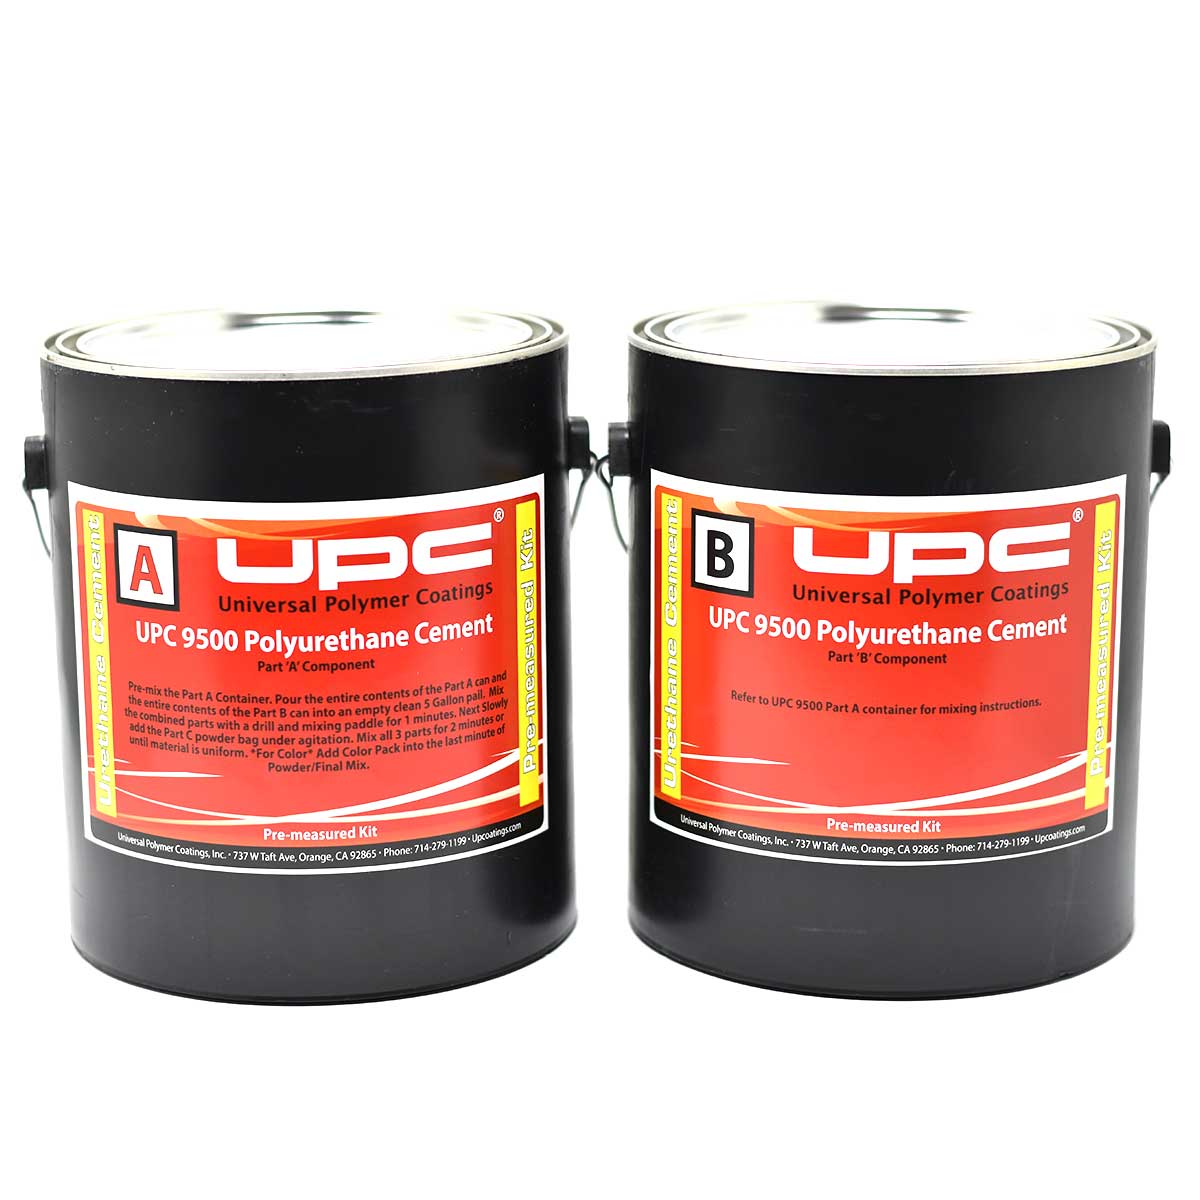 UPC 9500 Polyurethane Cement – Universal Polymer Coatings